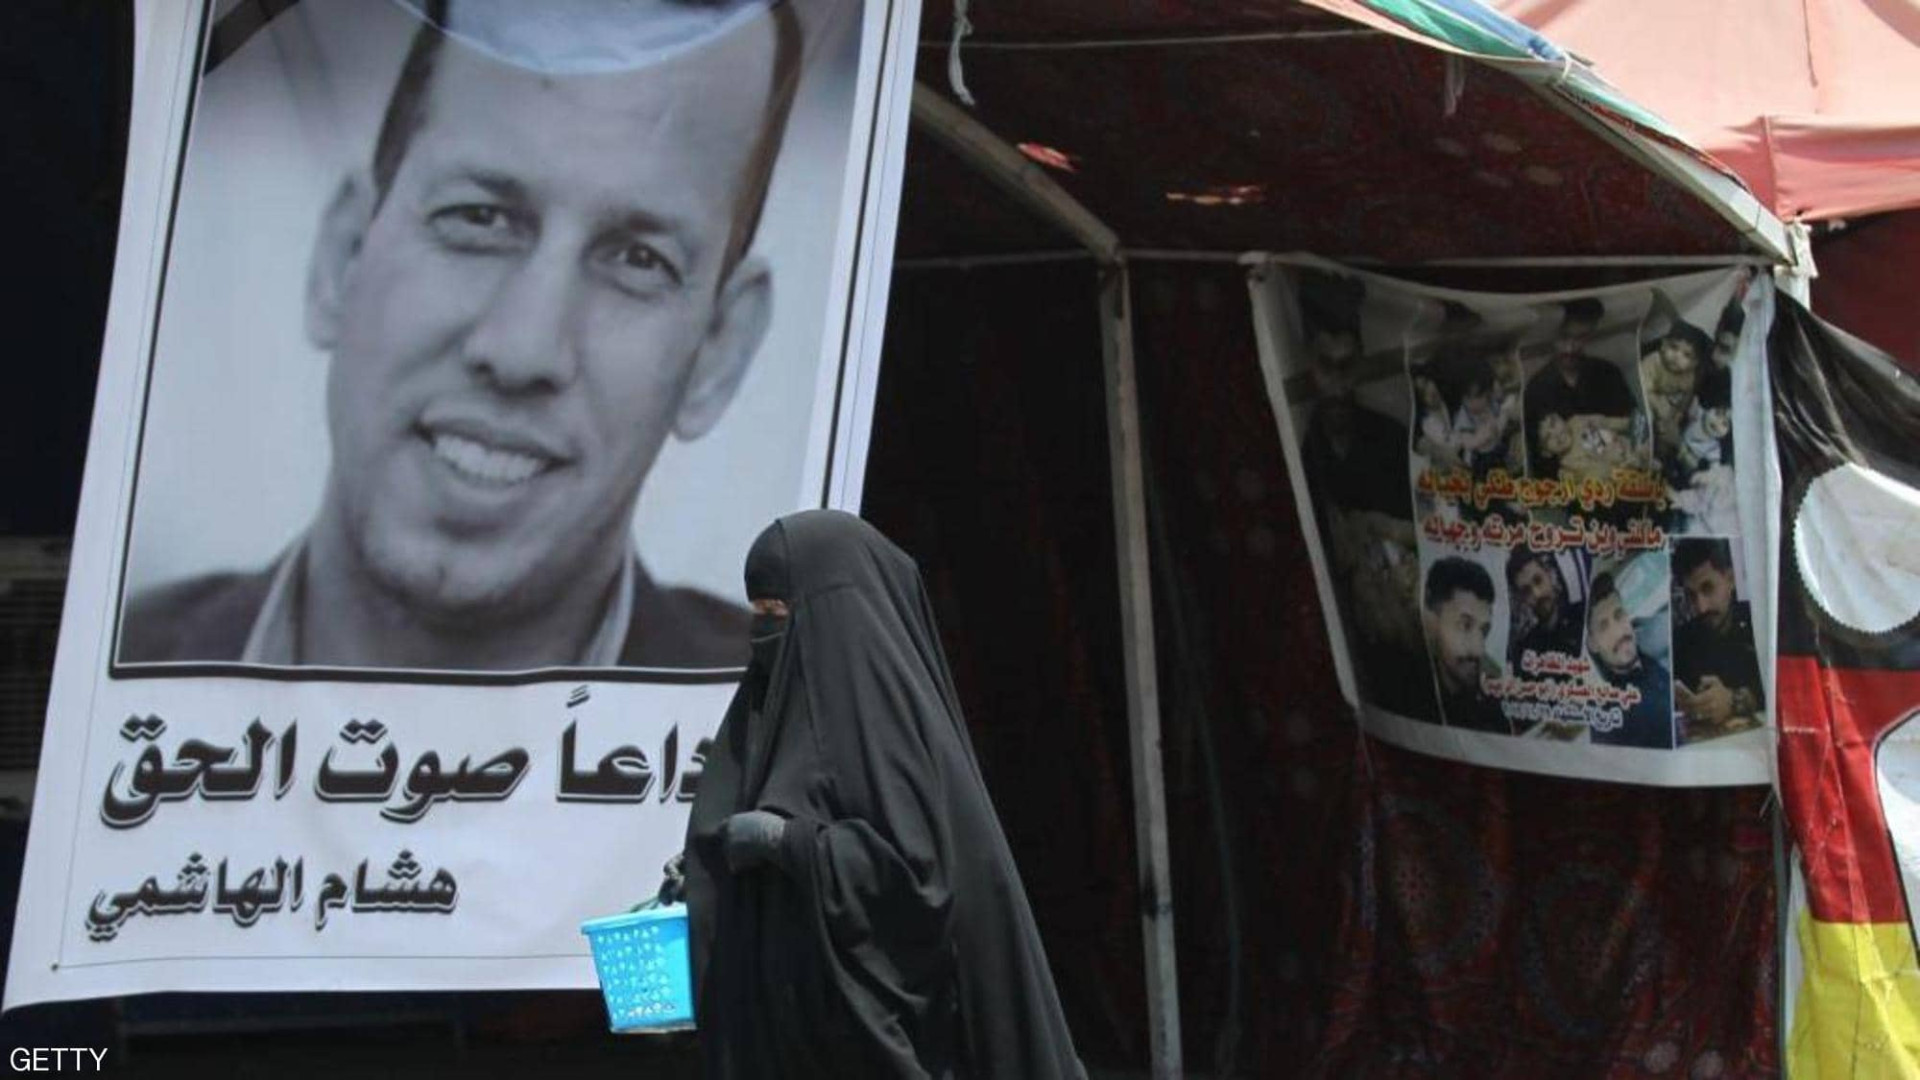 SMC refutes reports claiming Hisham al-Hashemi's killer escaped from custody